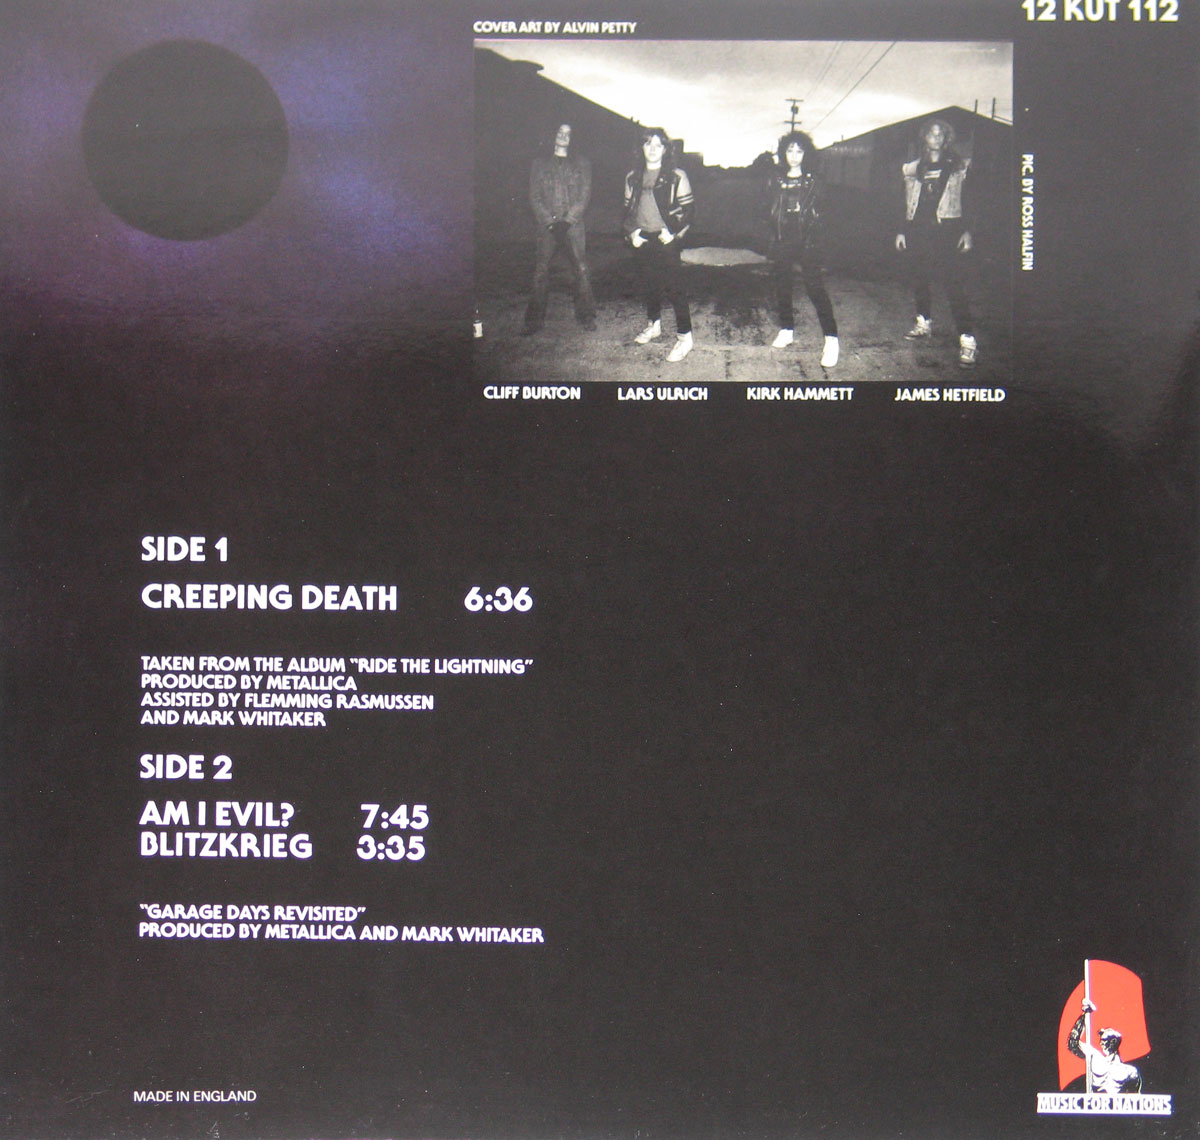 High Resolution Photo of Metallica Creeping Death Blue Vinyl 